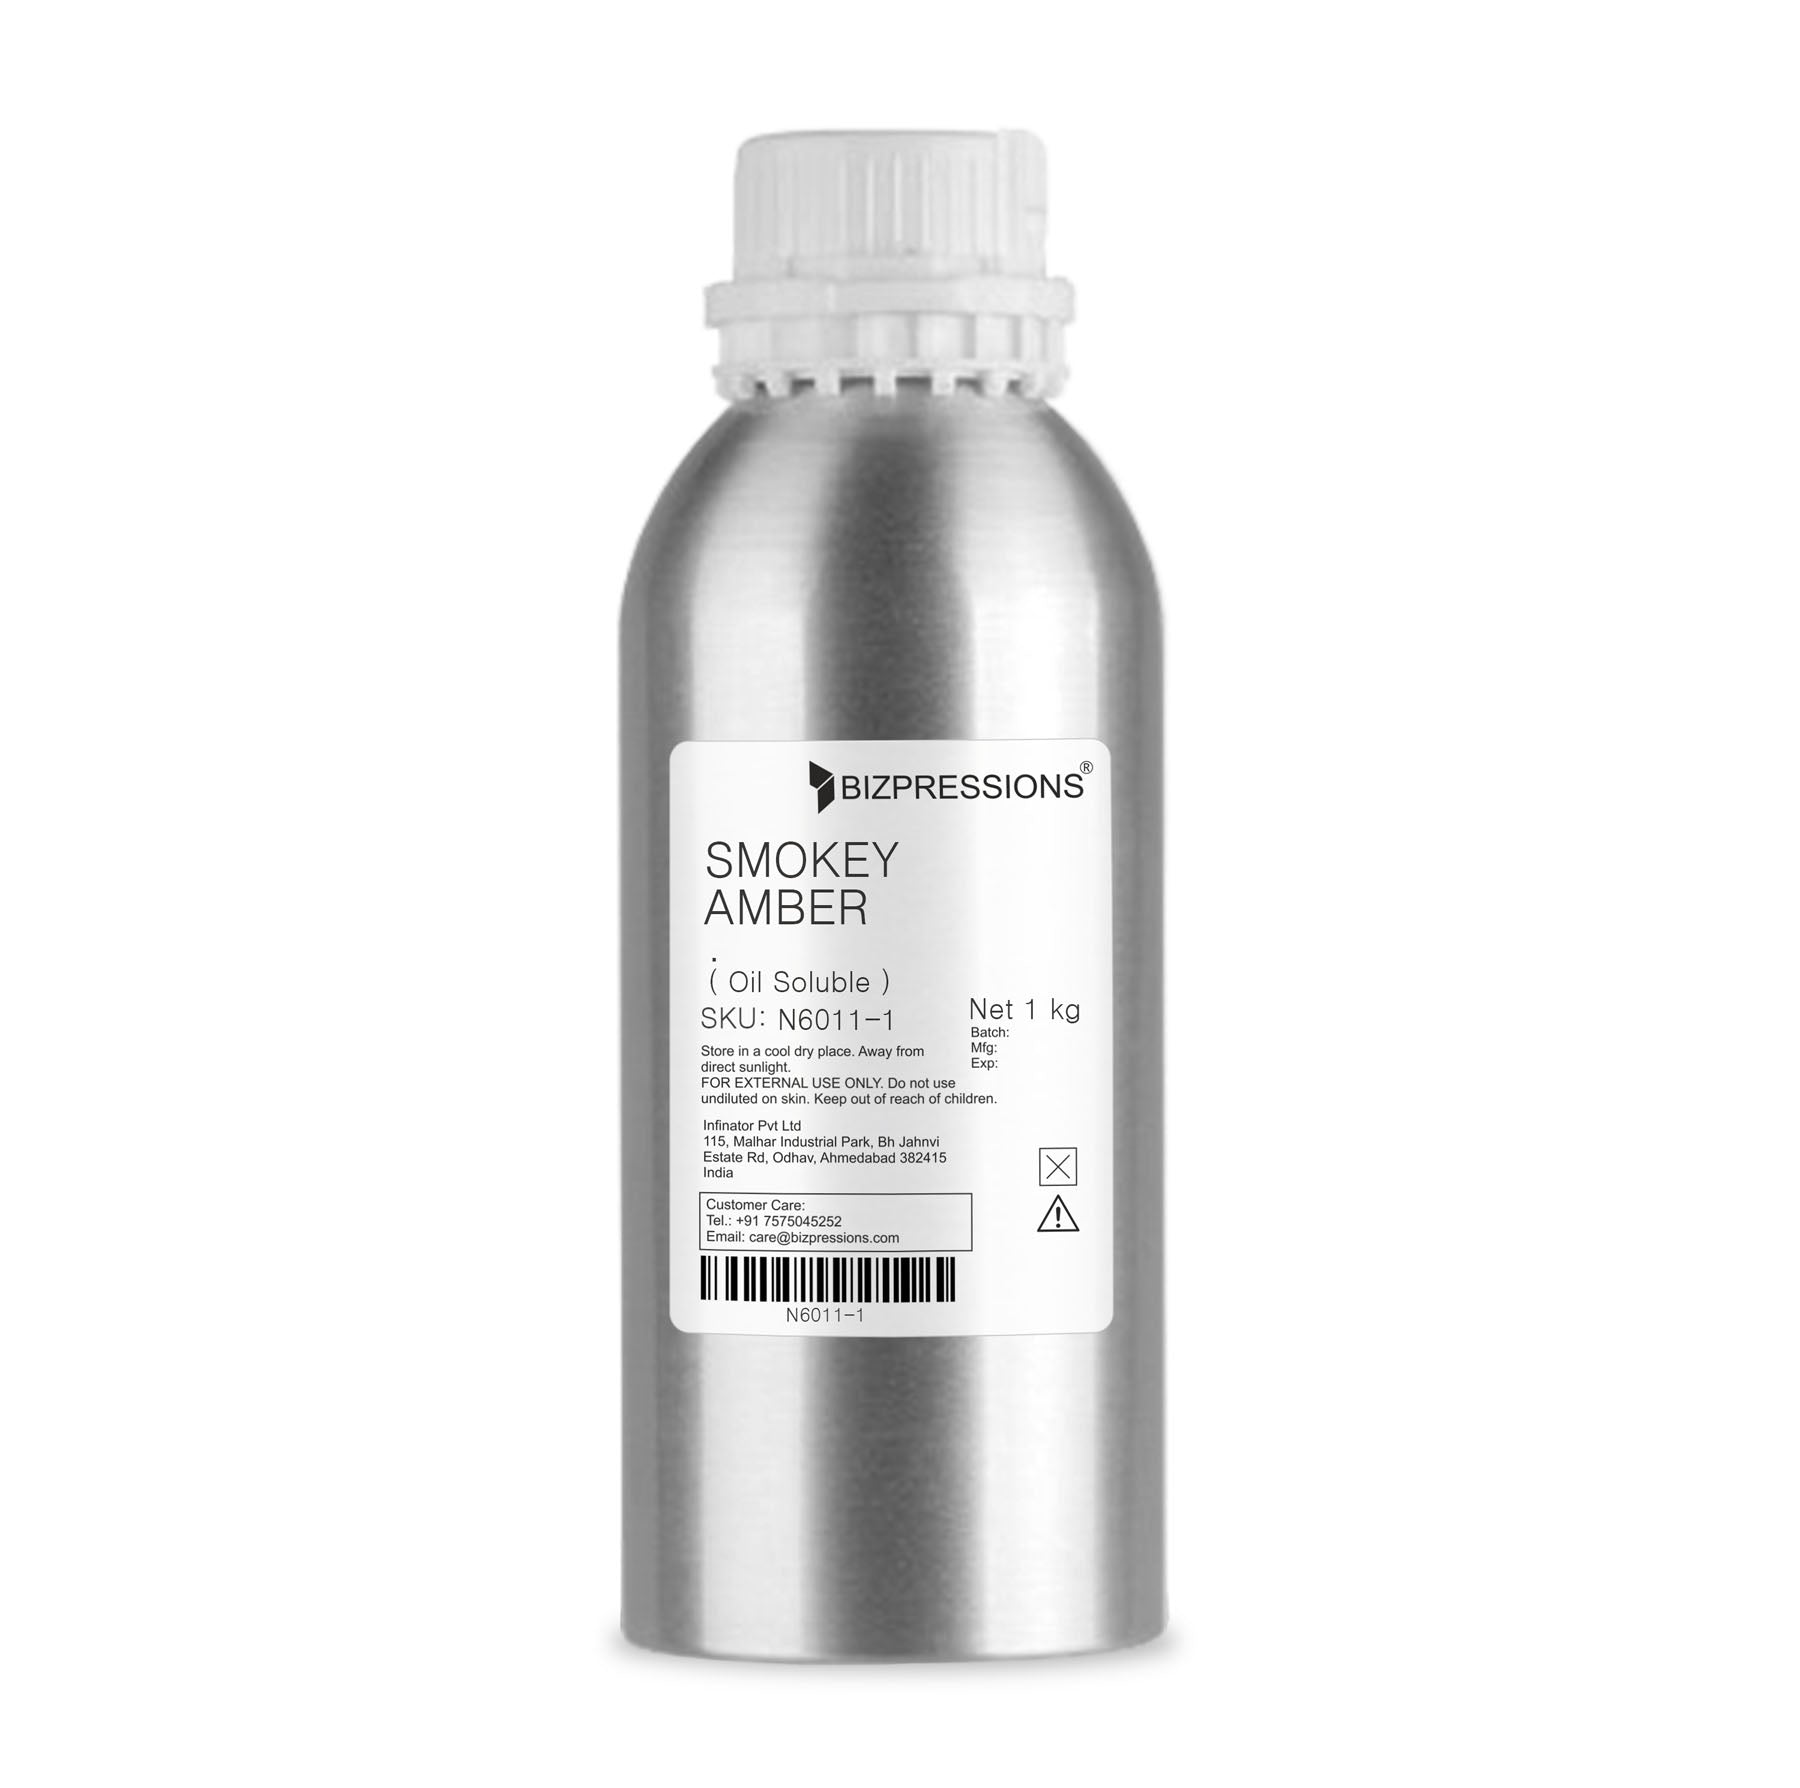 SMOKEY AMBER - Fragrance ( Oil Soluble ) - 1 kg